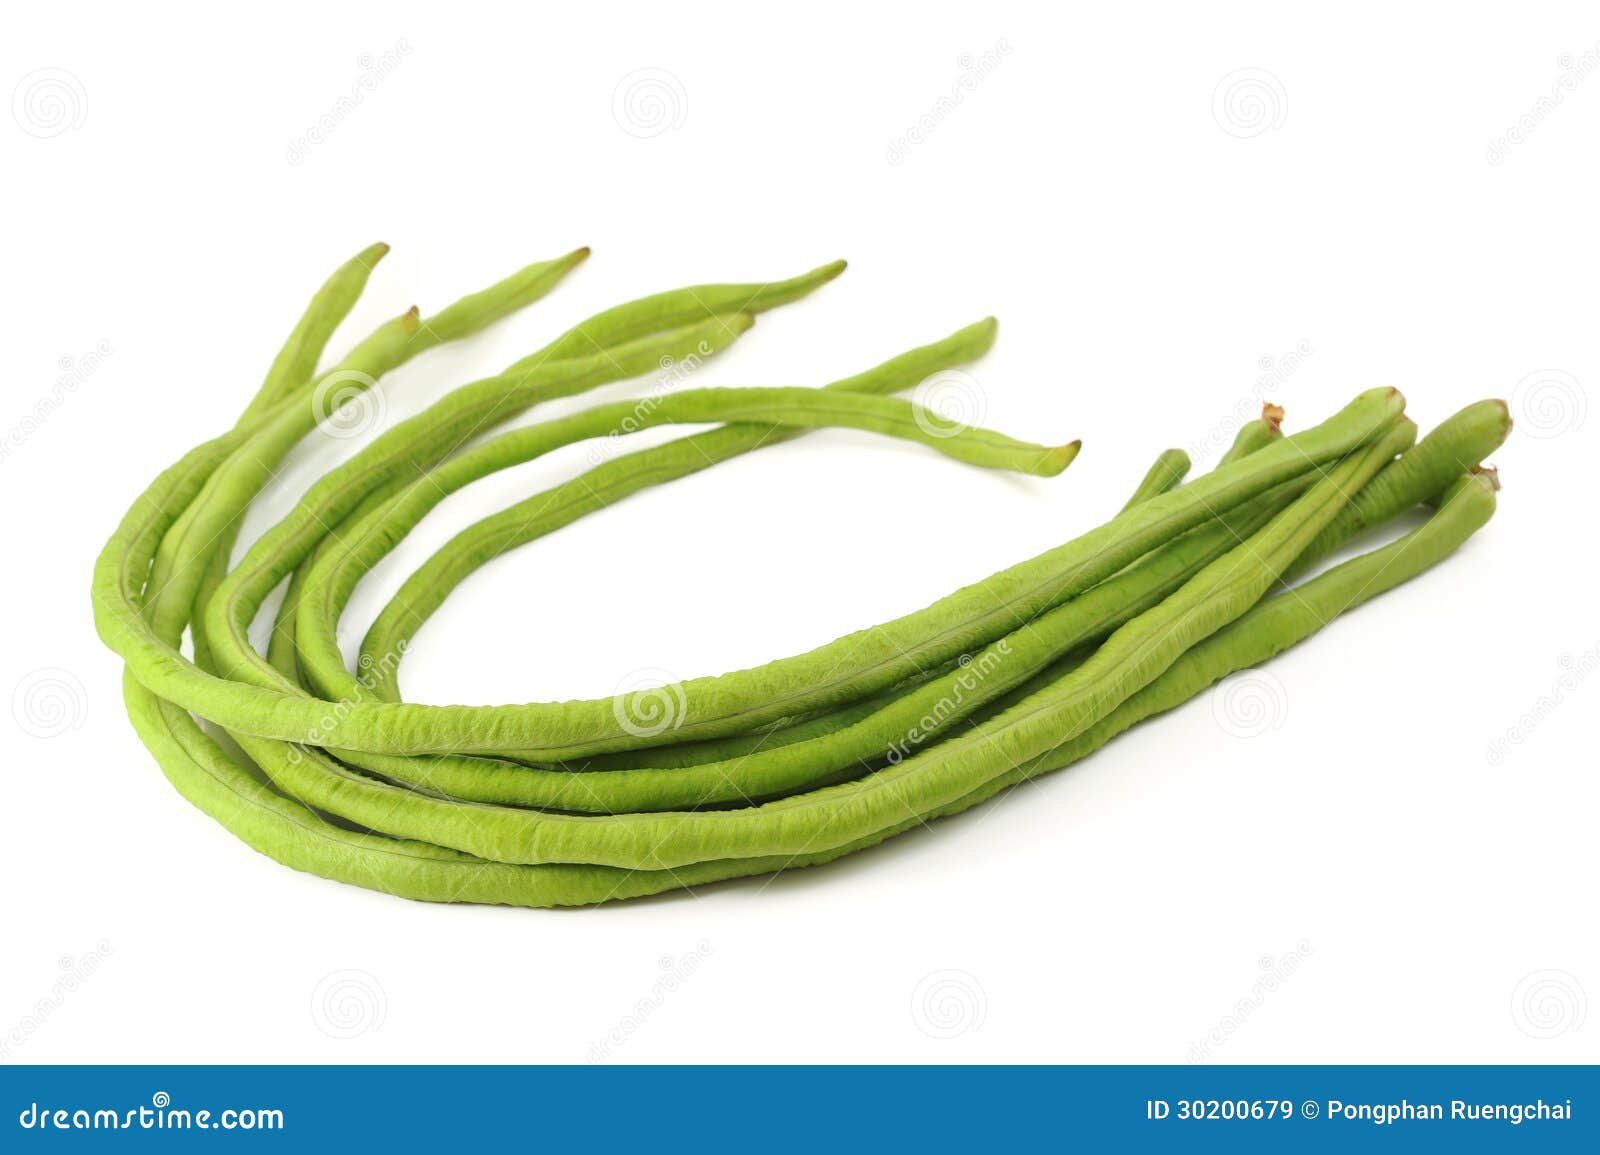 Long Bean 长豆 | CKH Food Trading